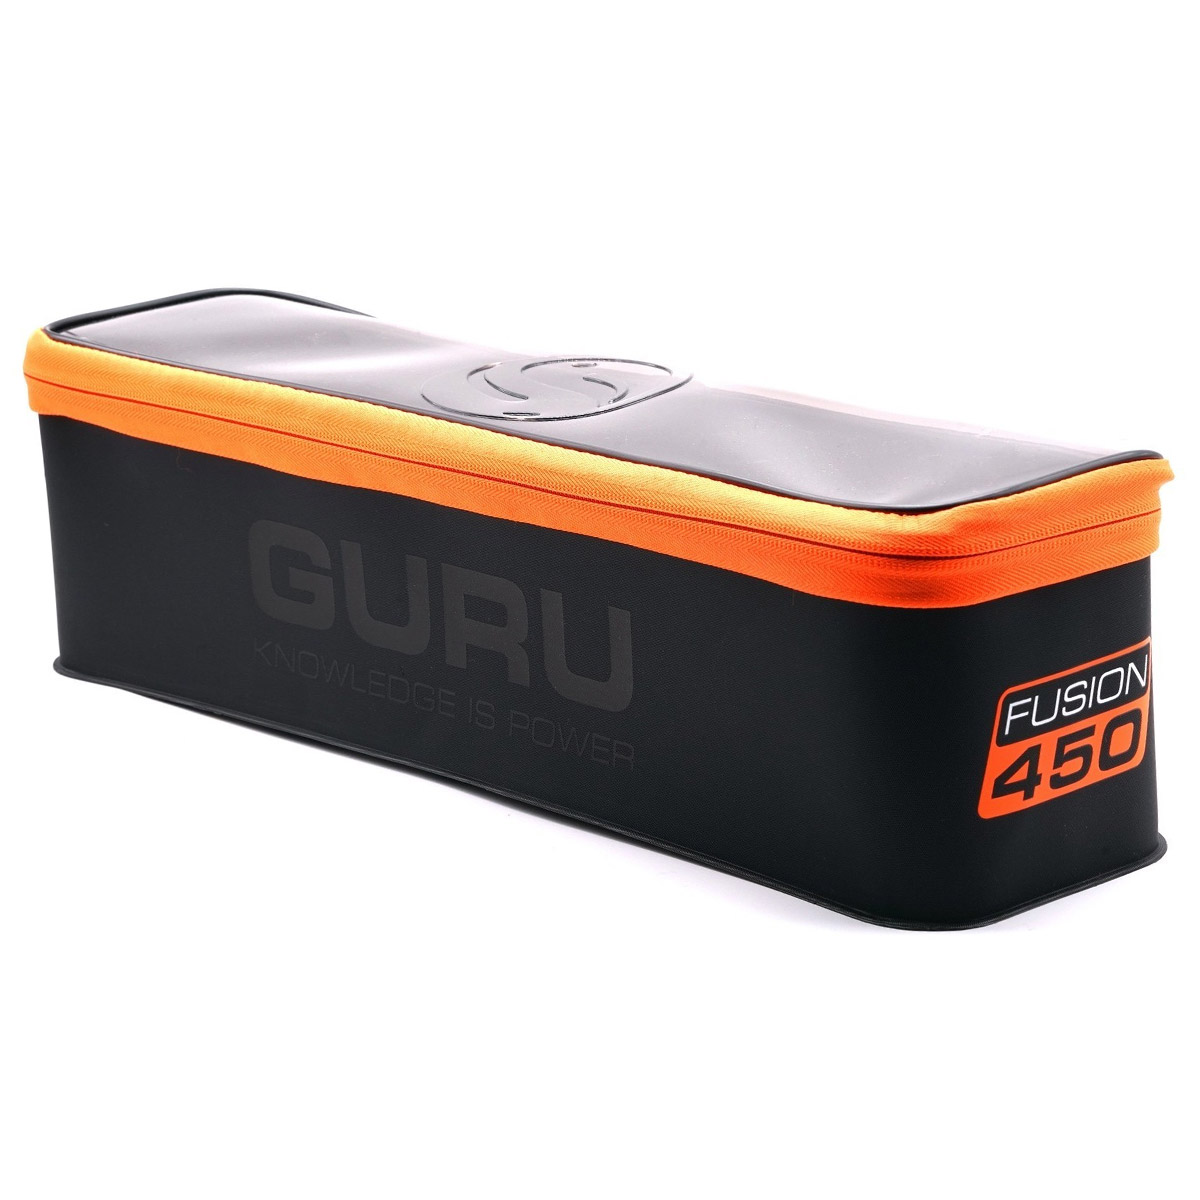 Guru Fusion 450 EVA Storage System